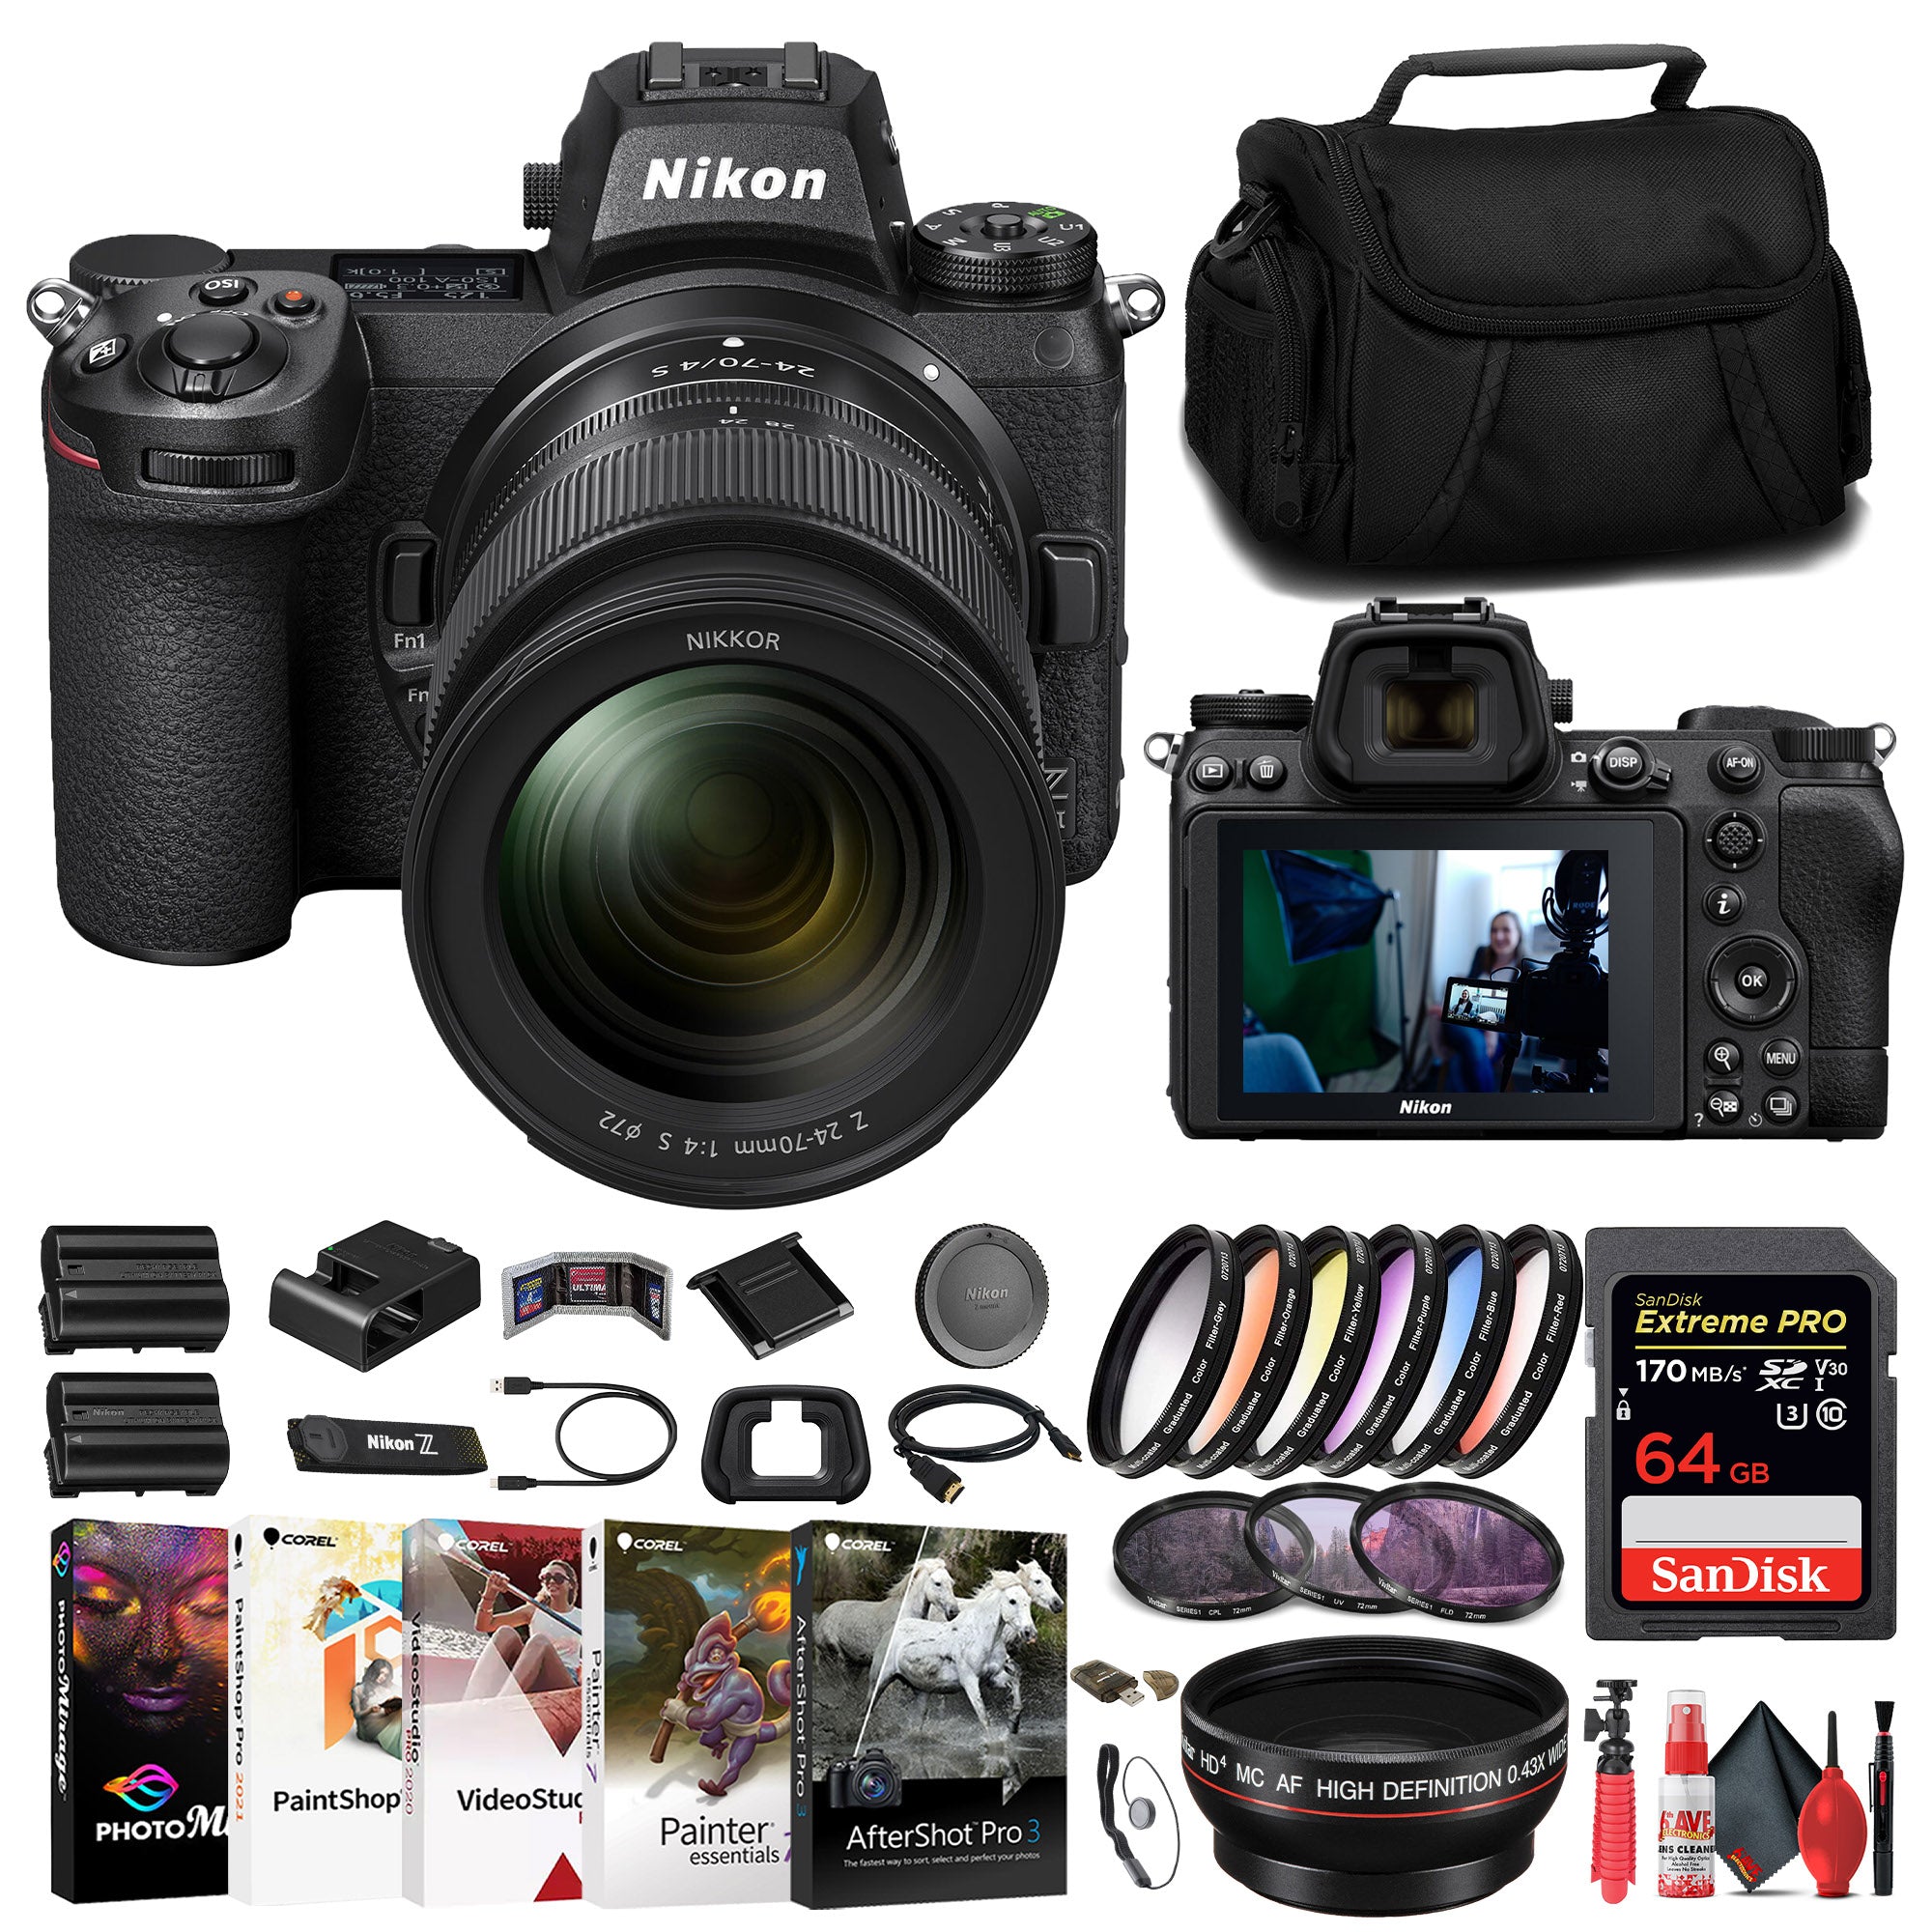 Nikon Z7 II Mirrorless Camera W/ 24-70mm f/4 Lens + 64GB Card + Filter Kit + More